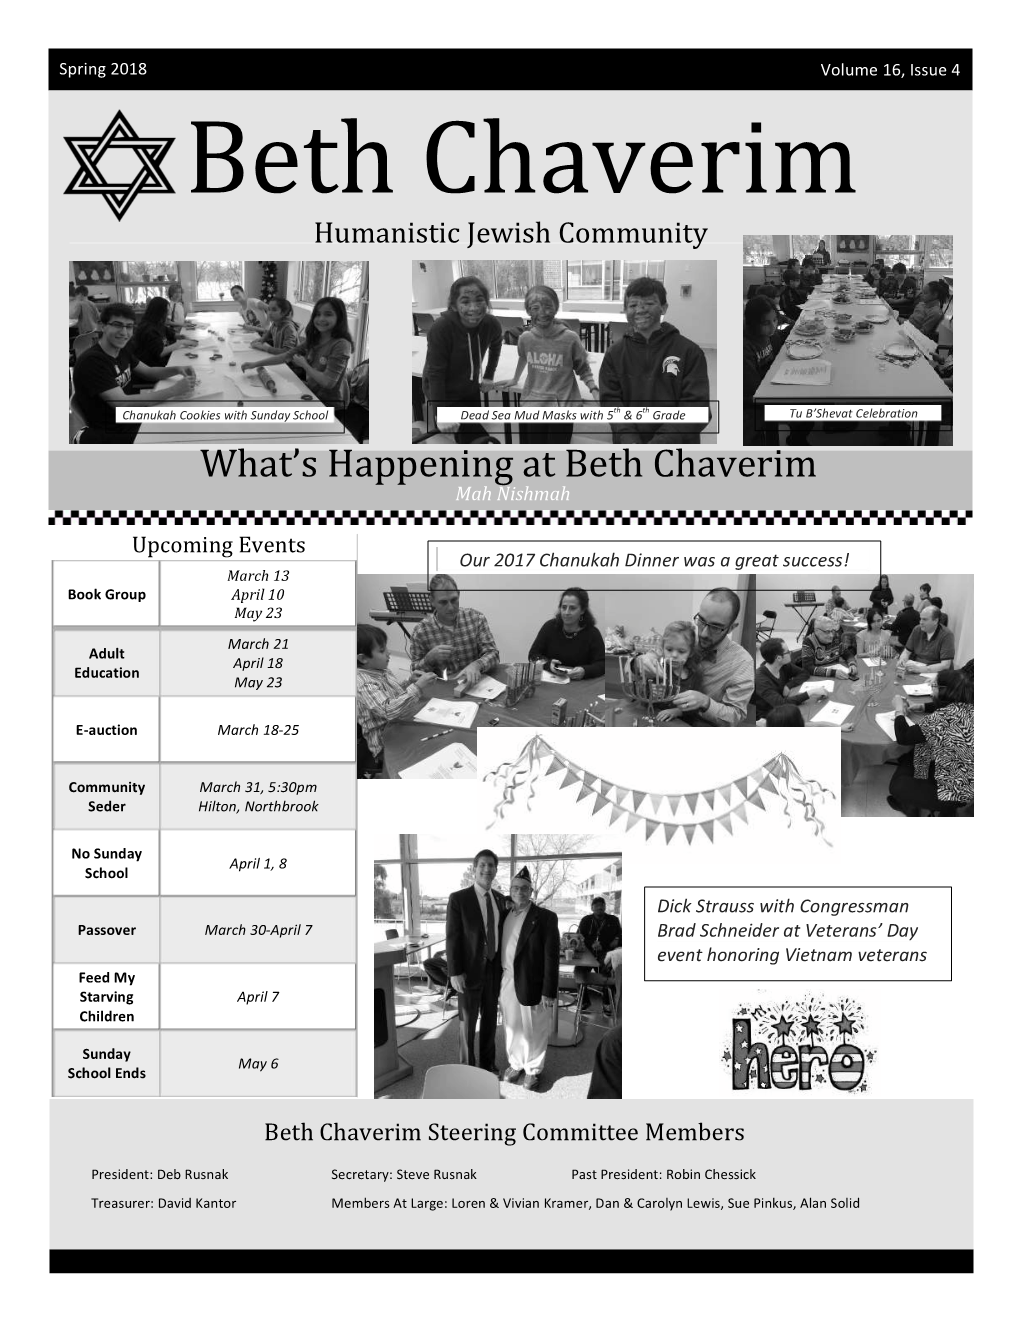 Beth Chaverim Humanistic Jewish Community